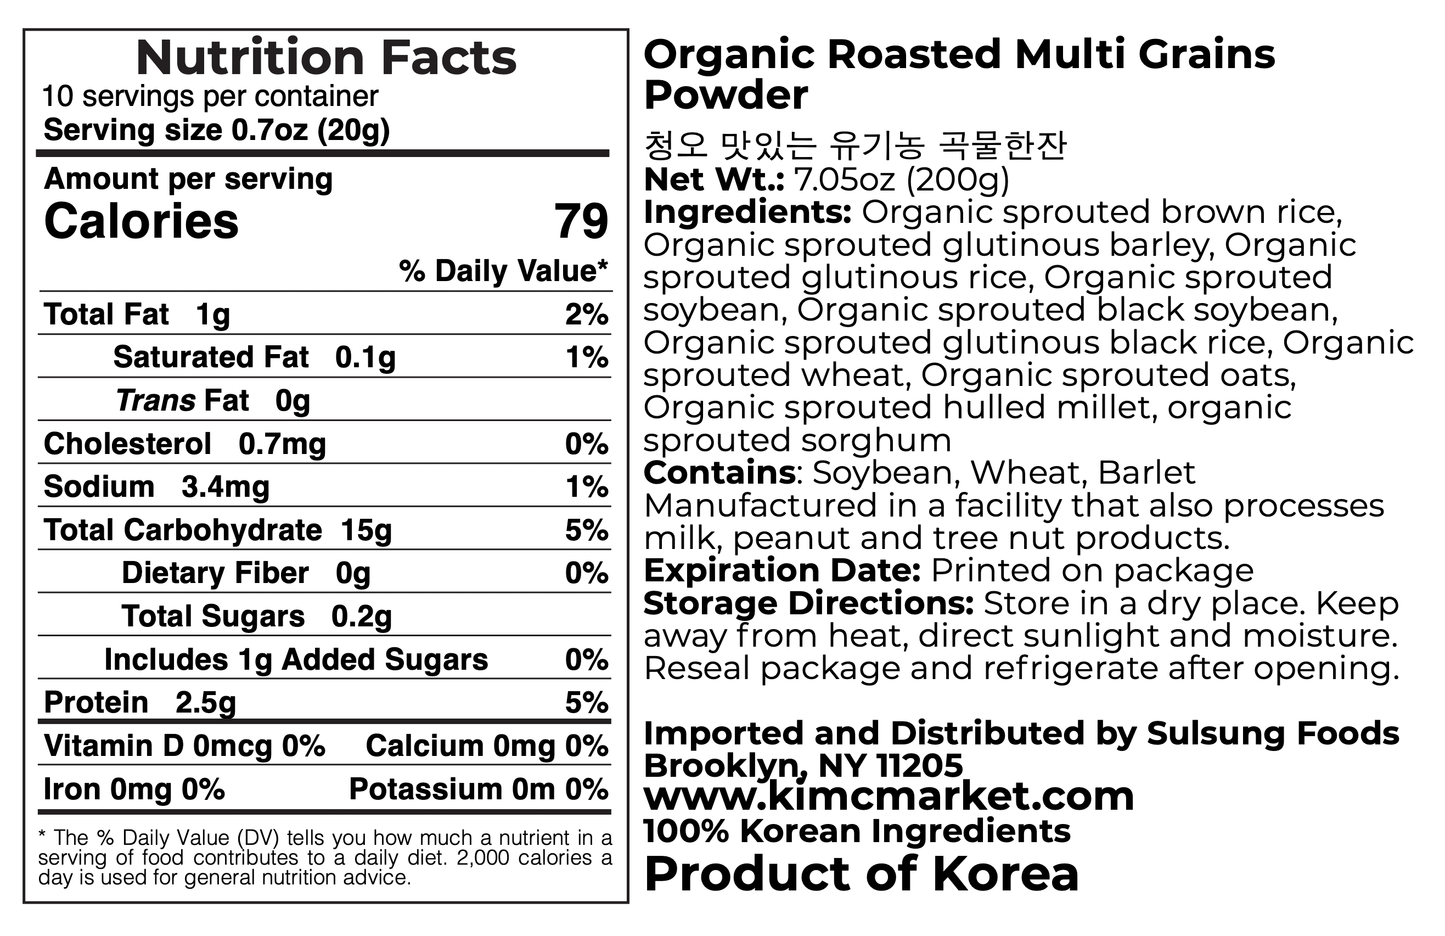 Organic Multi Grain Powder (Sunshik) - Kim'C Market